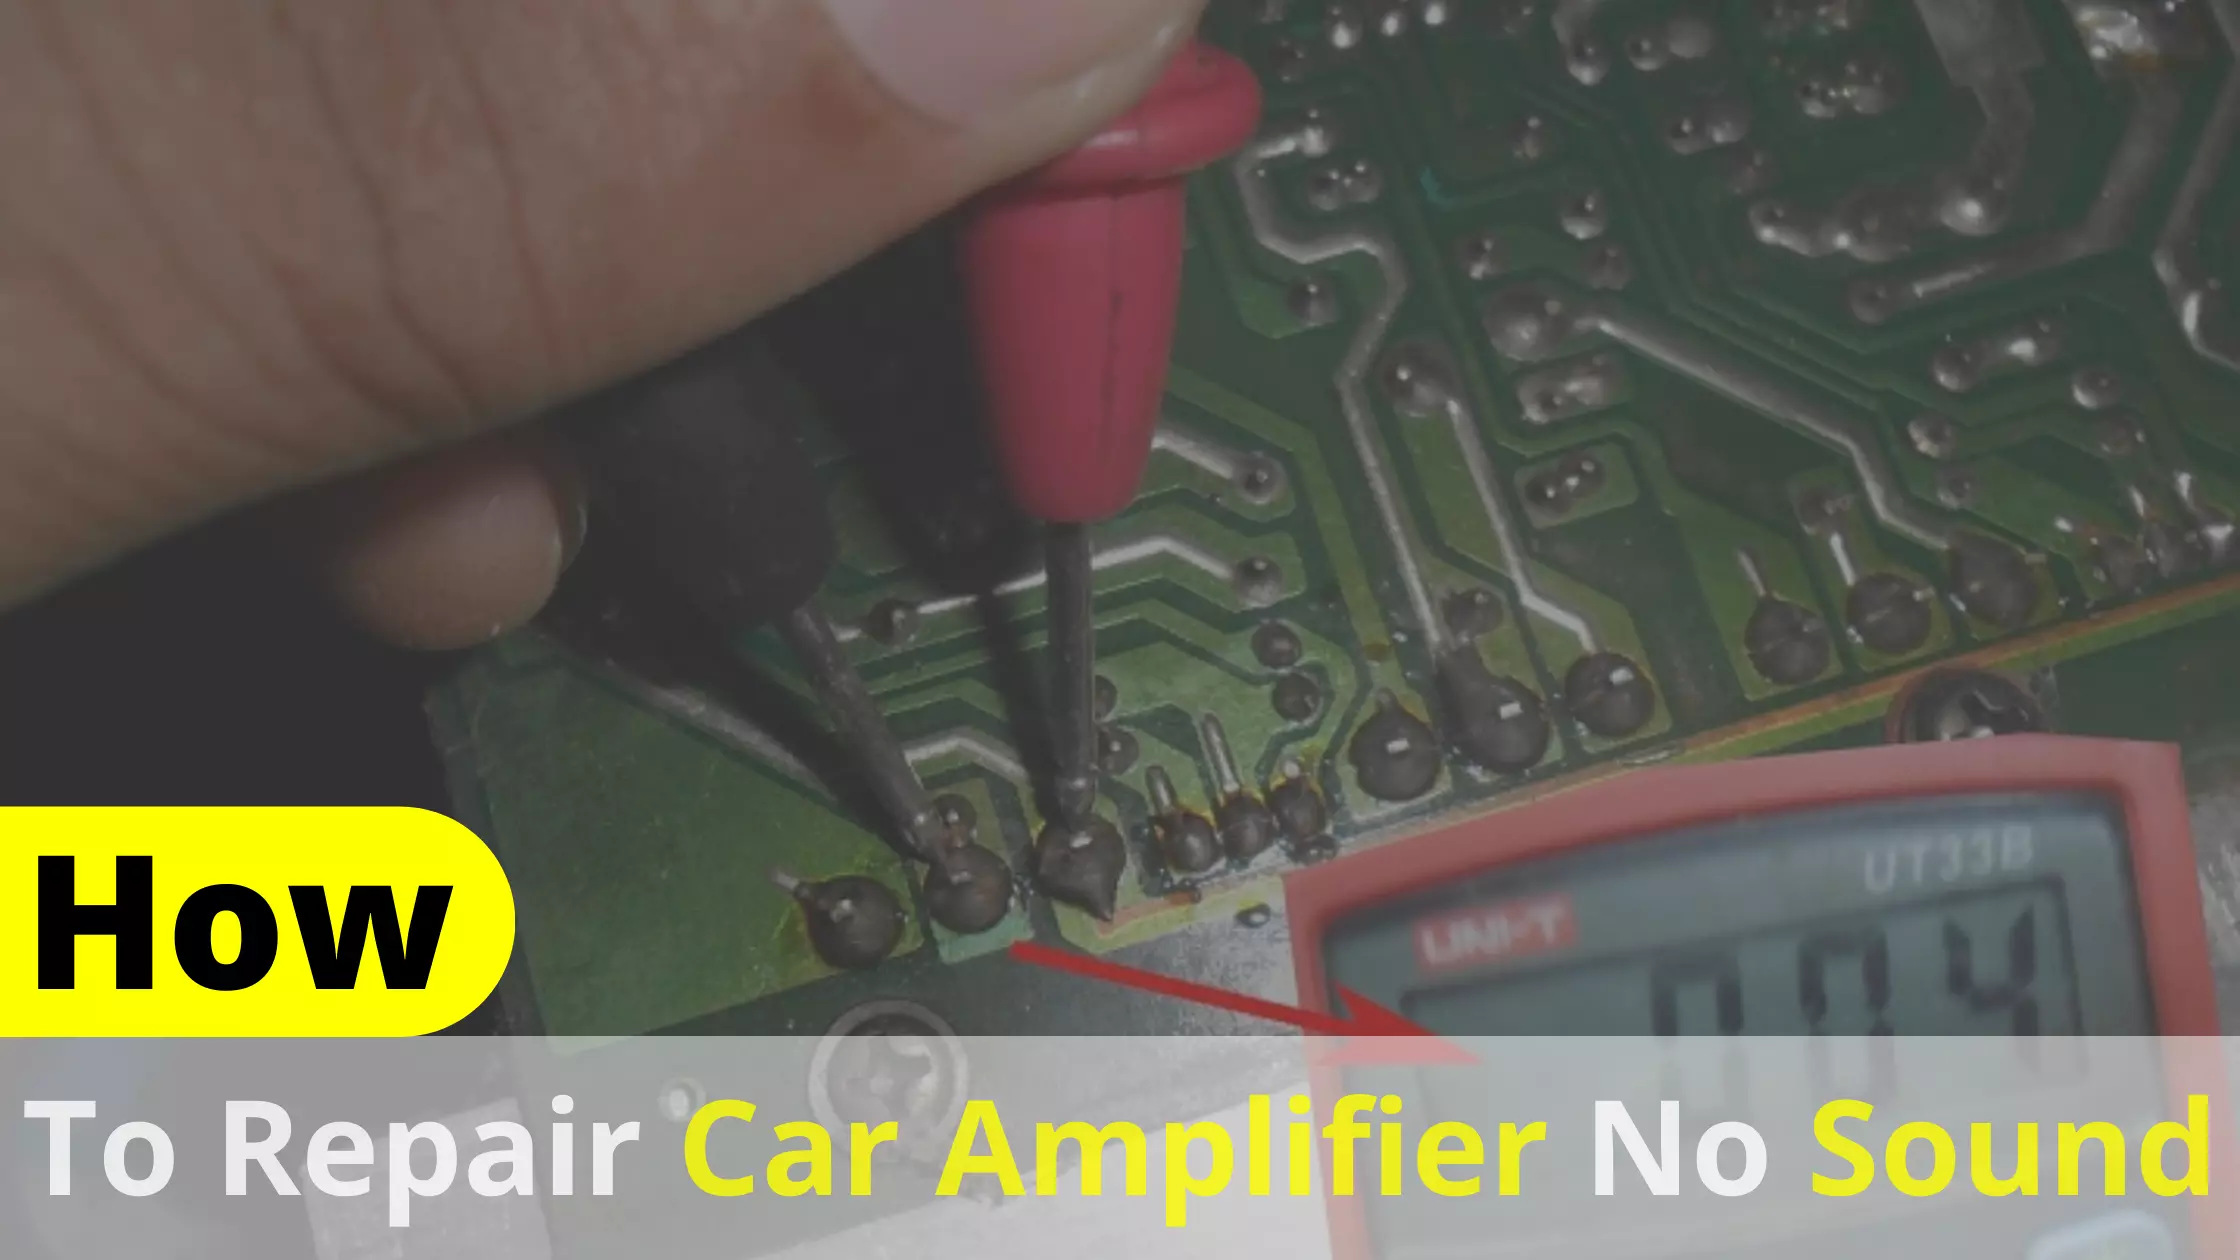 How To Repair Car Amplifier No Sound?